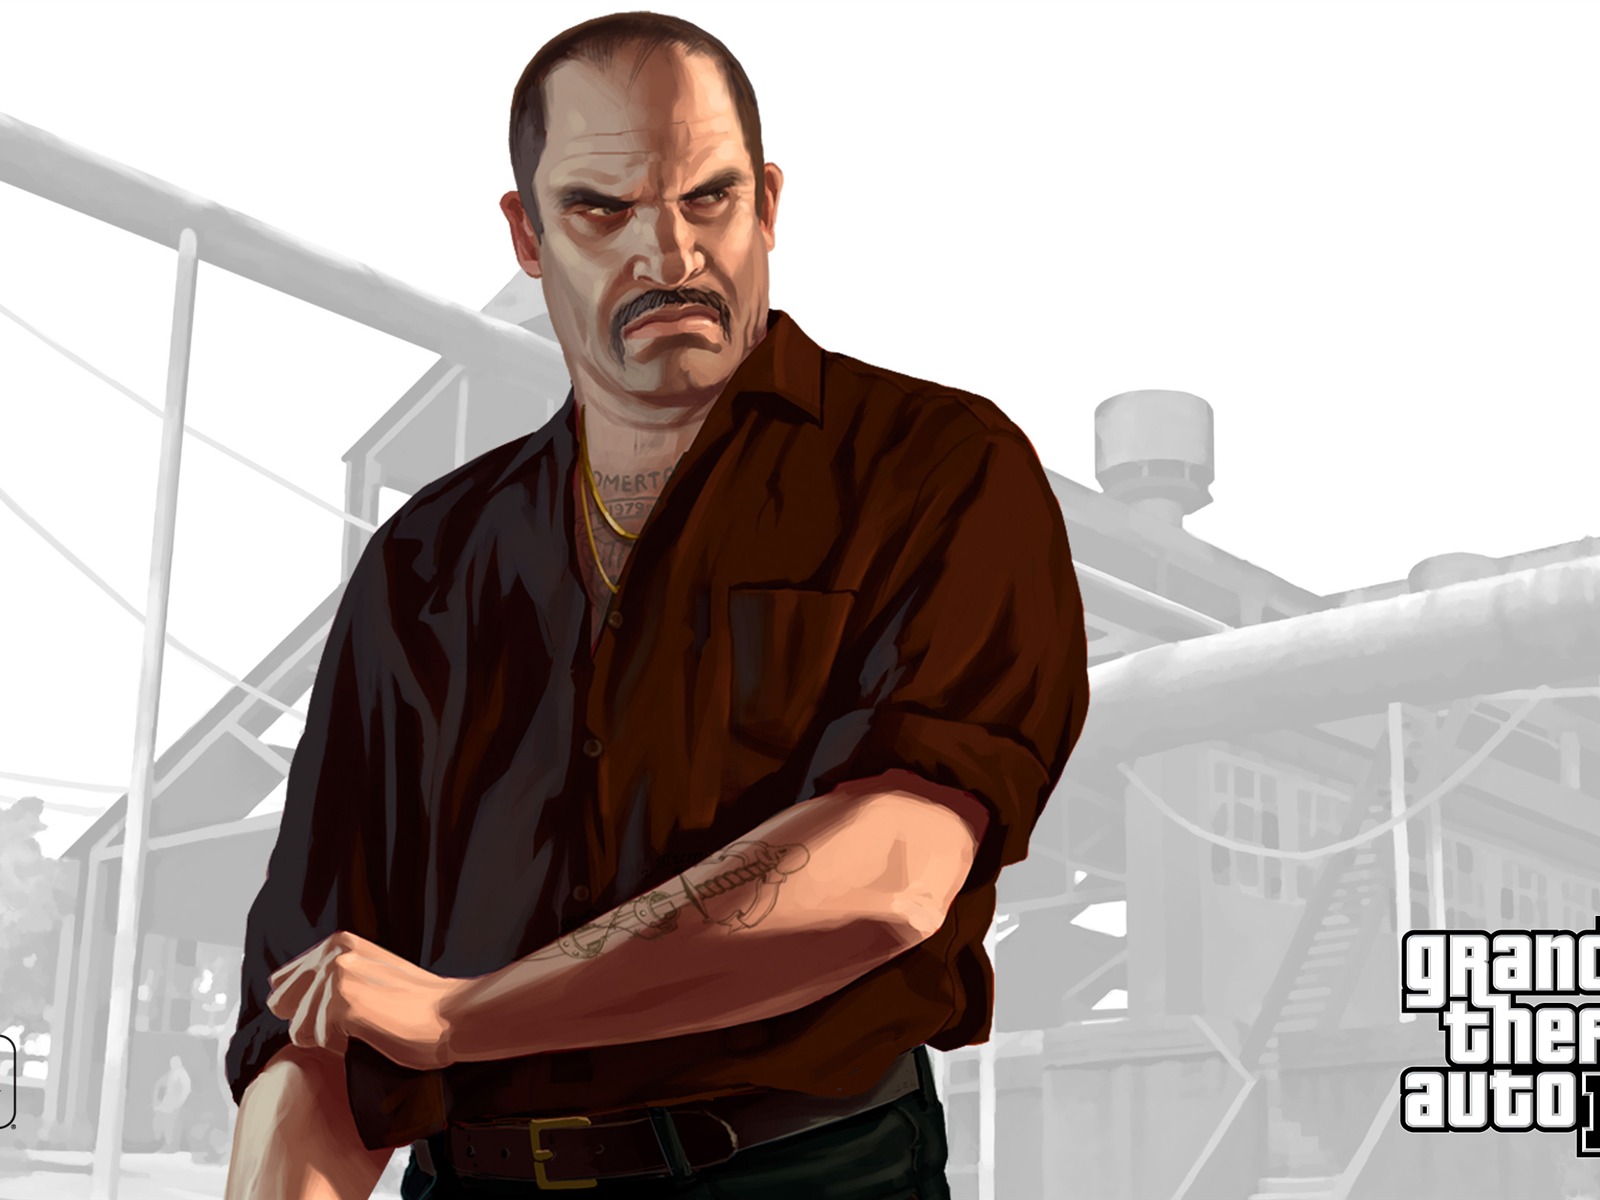 Grand Theft Auto: Vice City 侠盗猎车手: 罪恶都市27 - 1600x1200